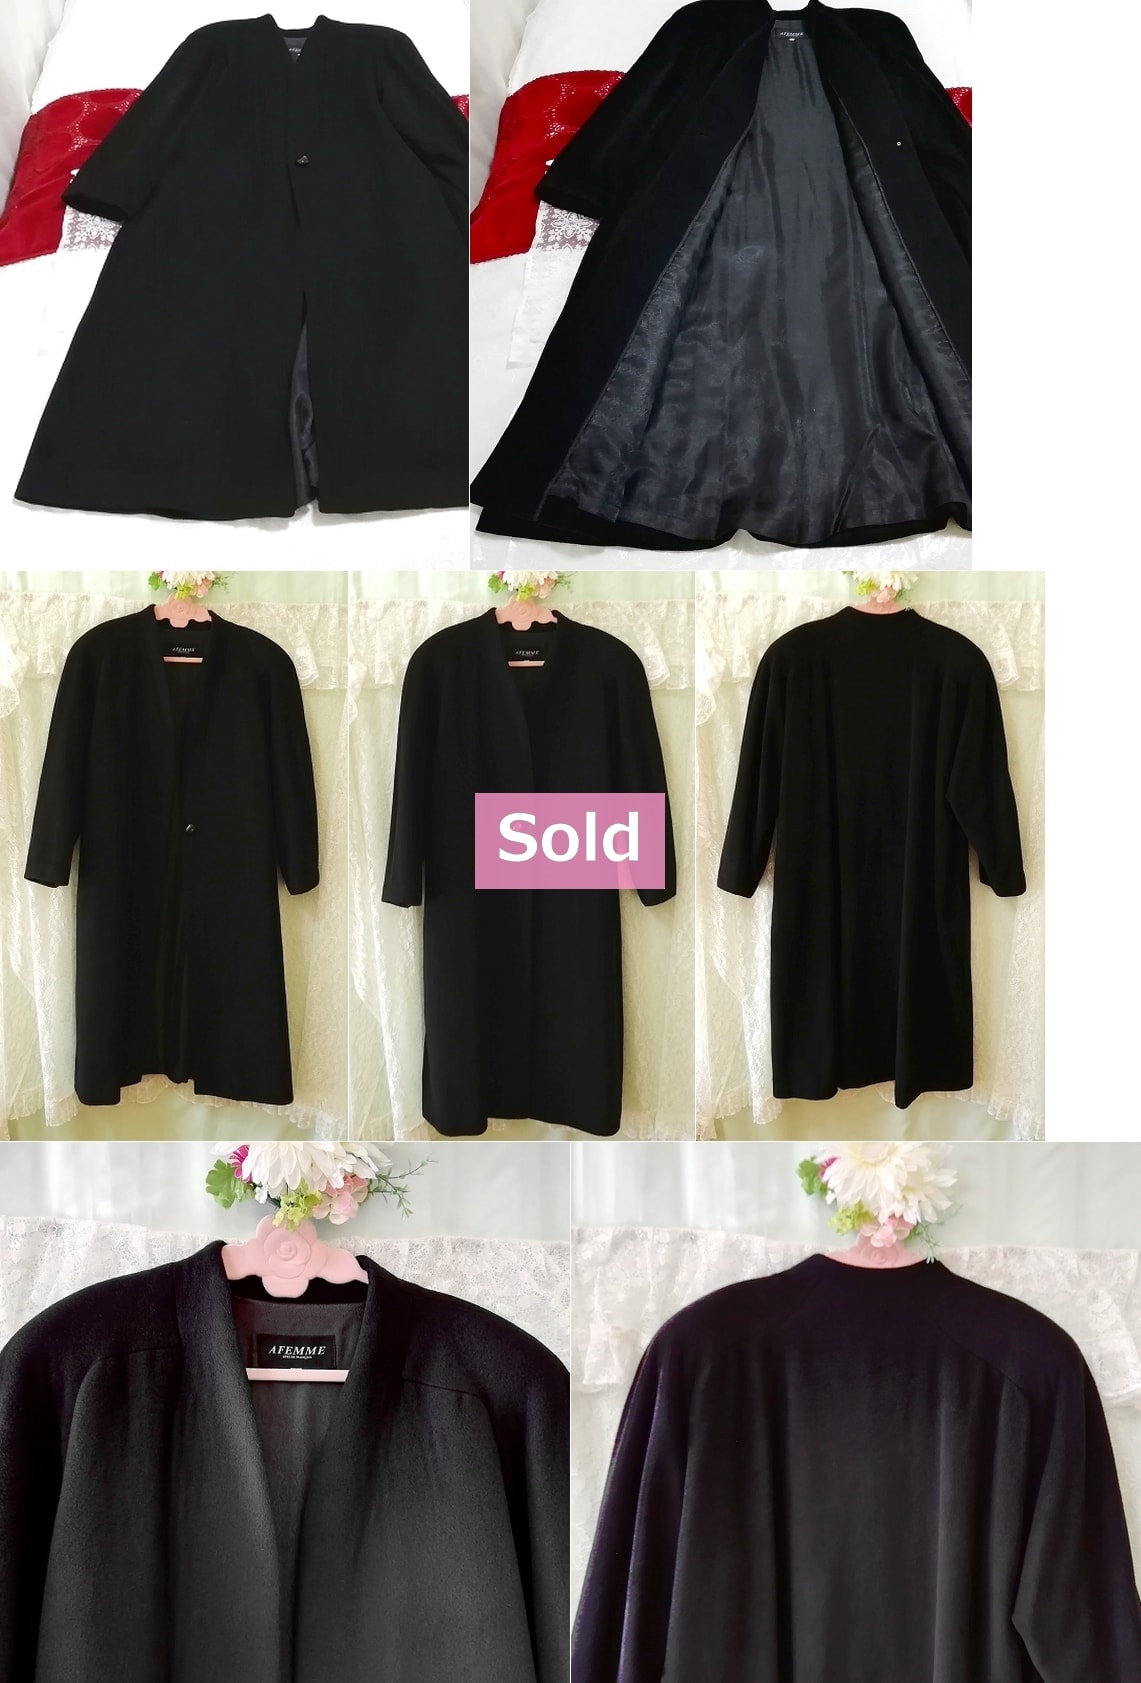 معطف كارديجان طويل أسود من AFEMME Atelier Franais 100٪ أسود طويل من الكشمير 100٪ معطف كارديجان طويل أسود